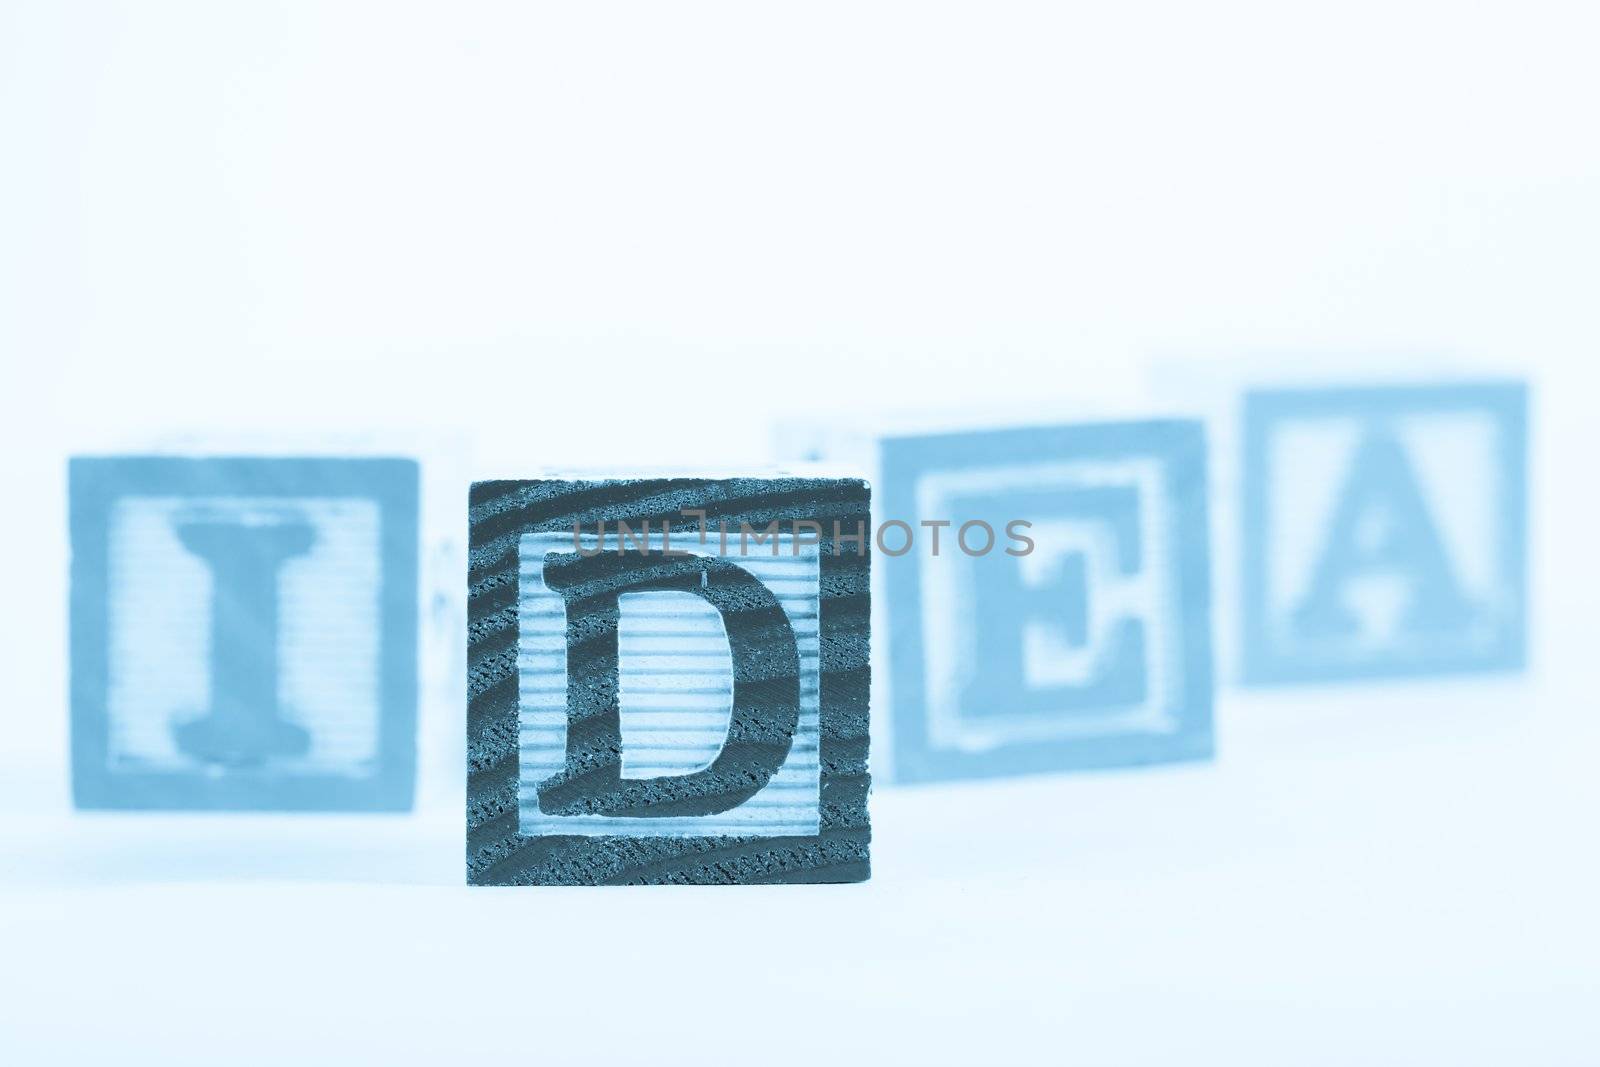 Word "idea" made from alphabet blocks on white